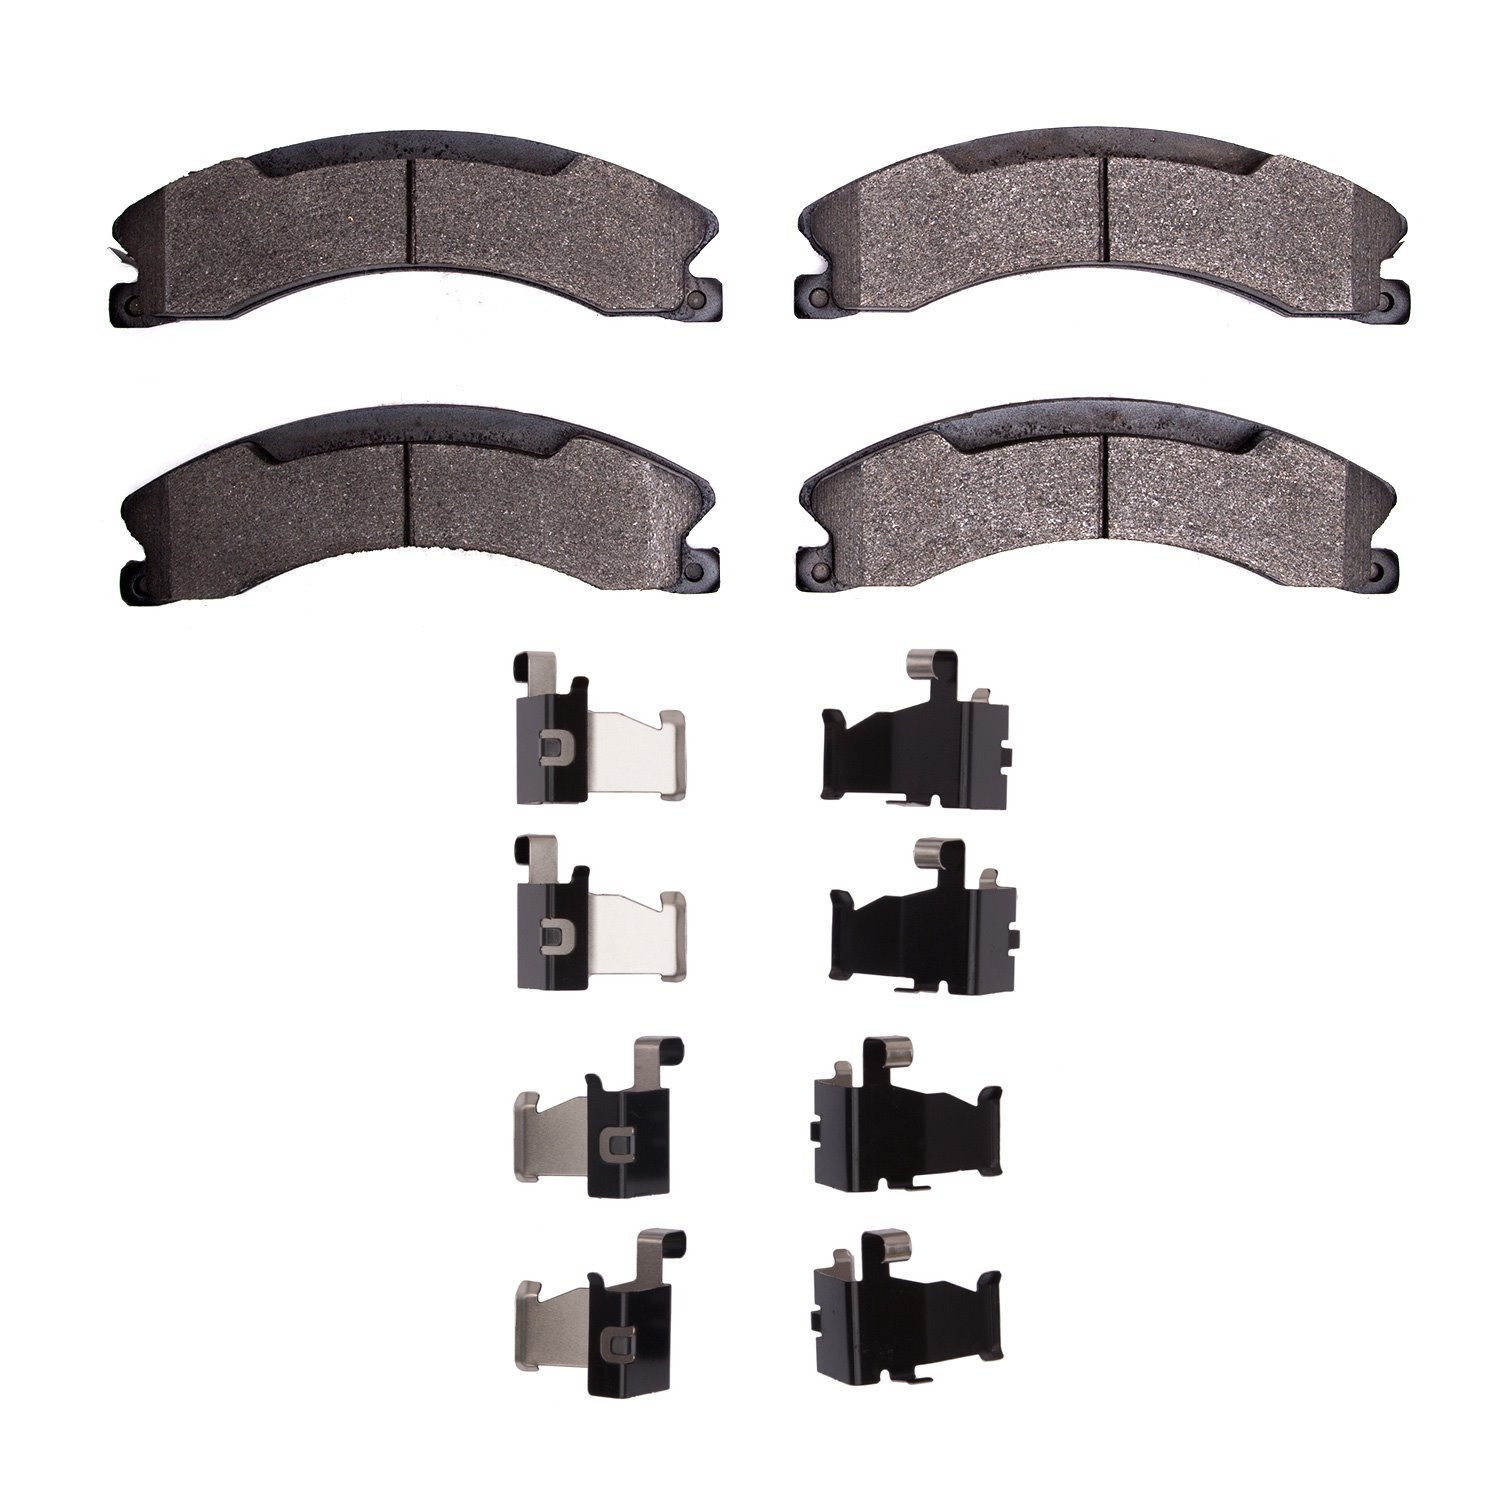 Ceramic Brake Pads & Hardware Kit, Fits Select Fits Multiple Makes/Models, Position: Front & Rear